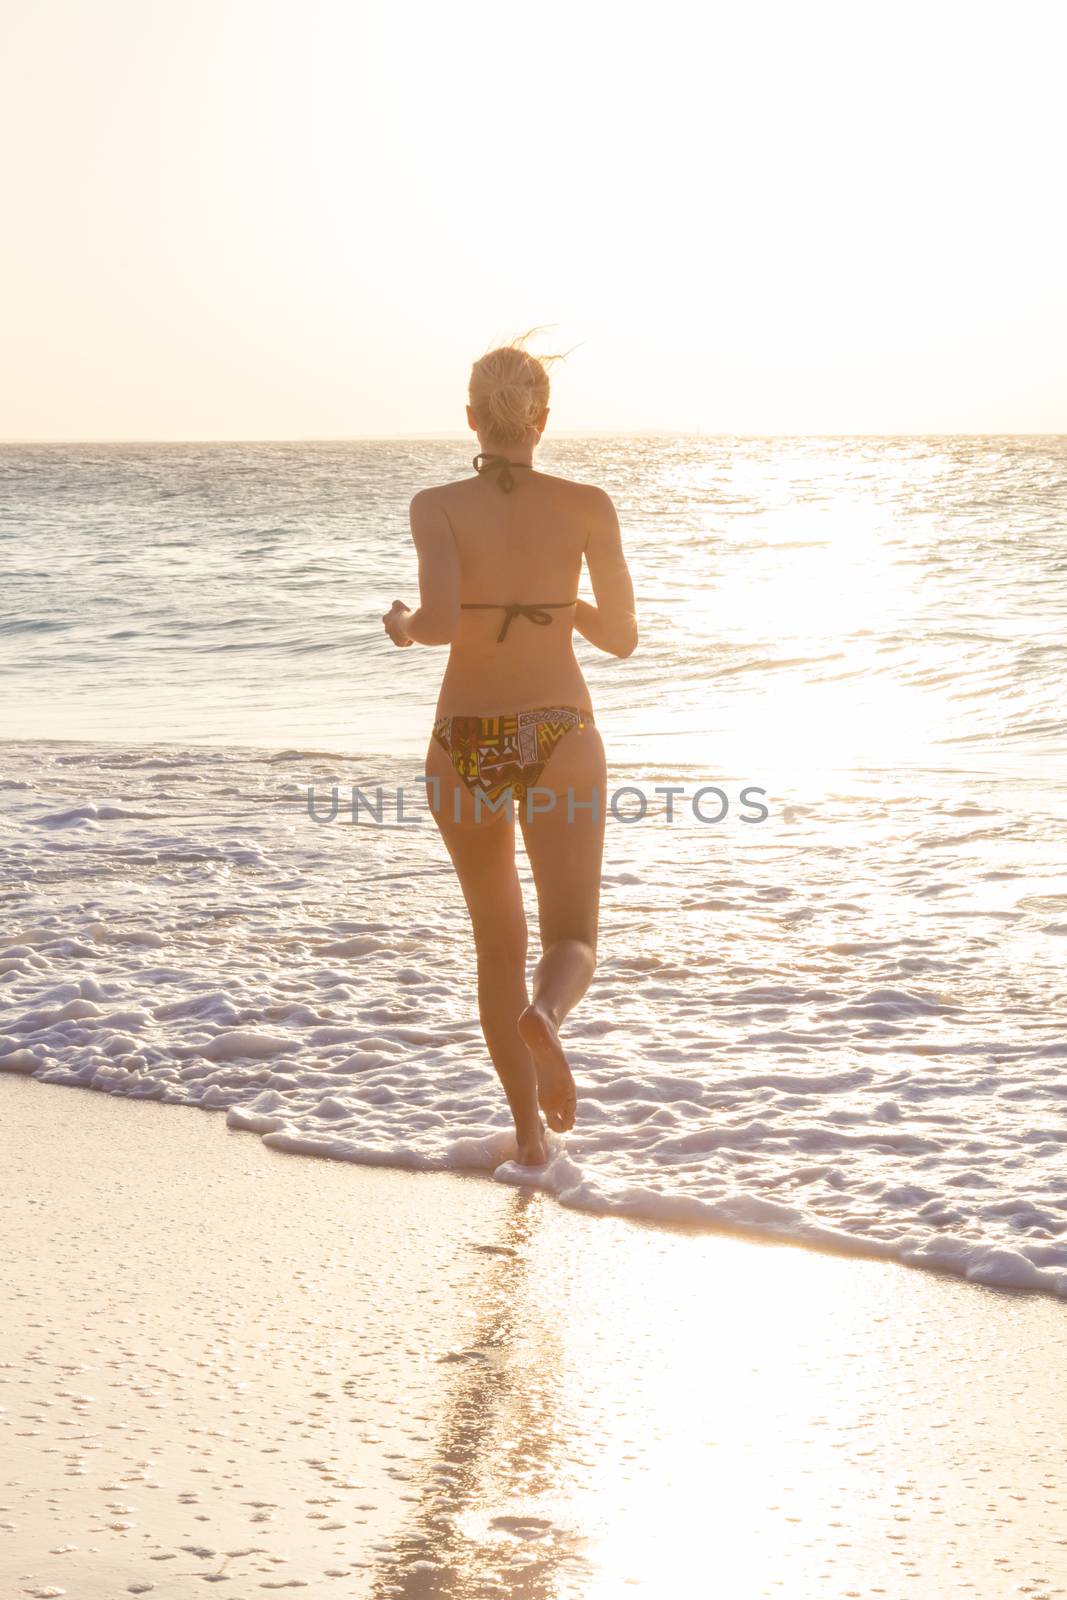 Happy woman enjoying in summer, running joyfully on tropical beach in sunset. Beautiful caucasian model wearing bikini on vacations on sandy beach. Footprints in sand.